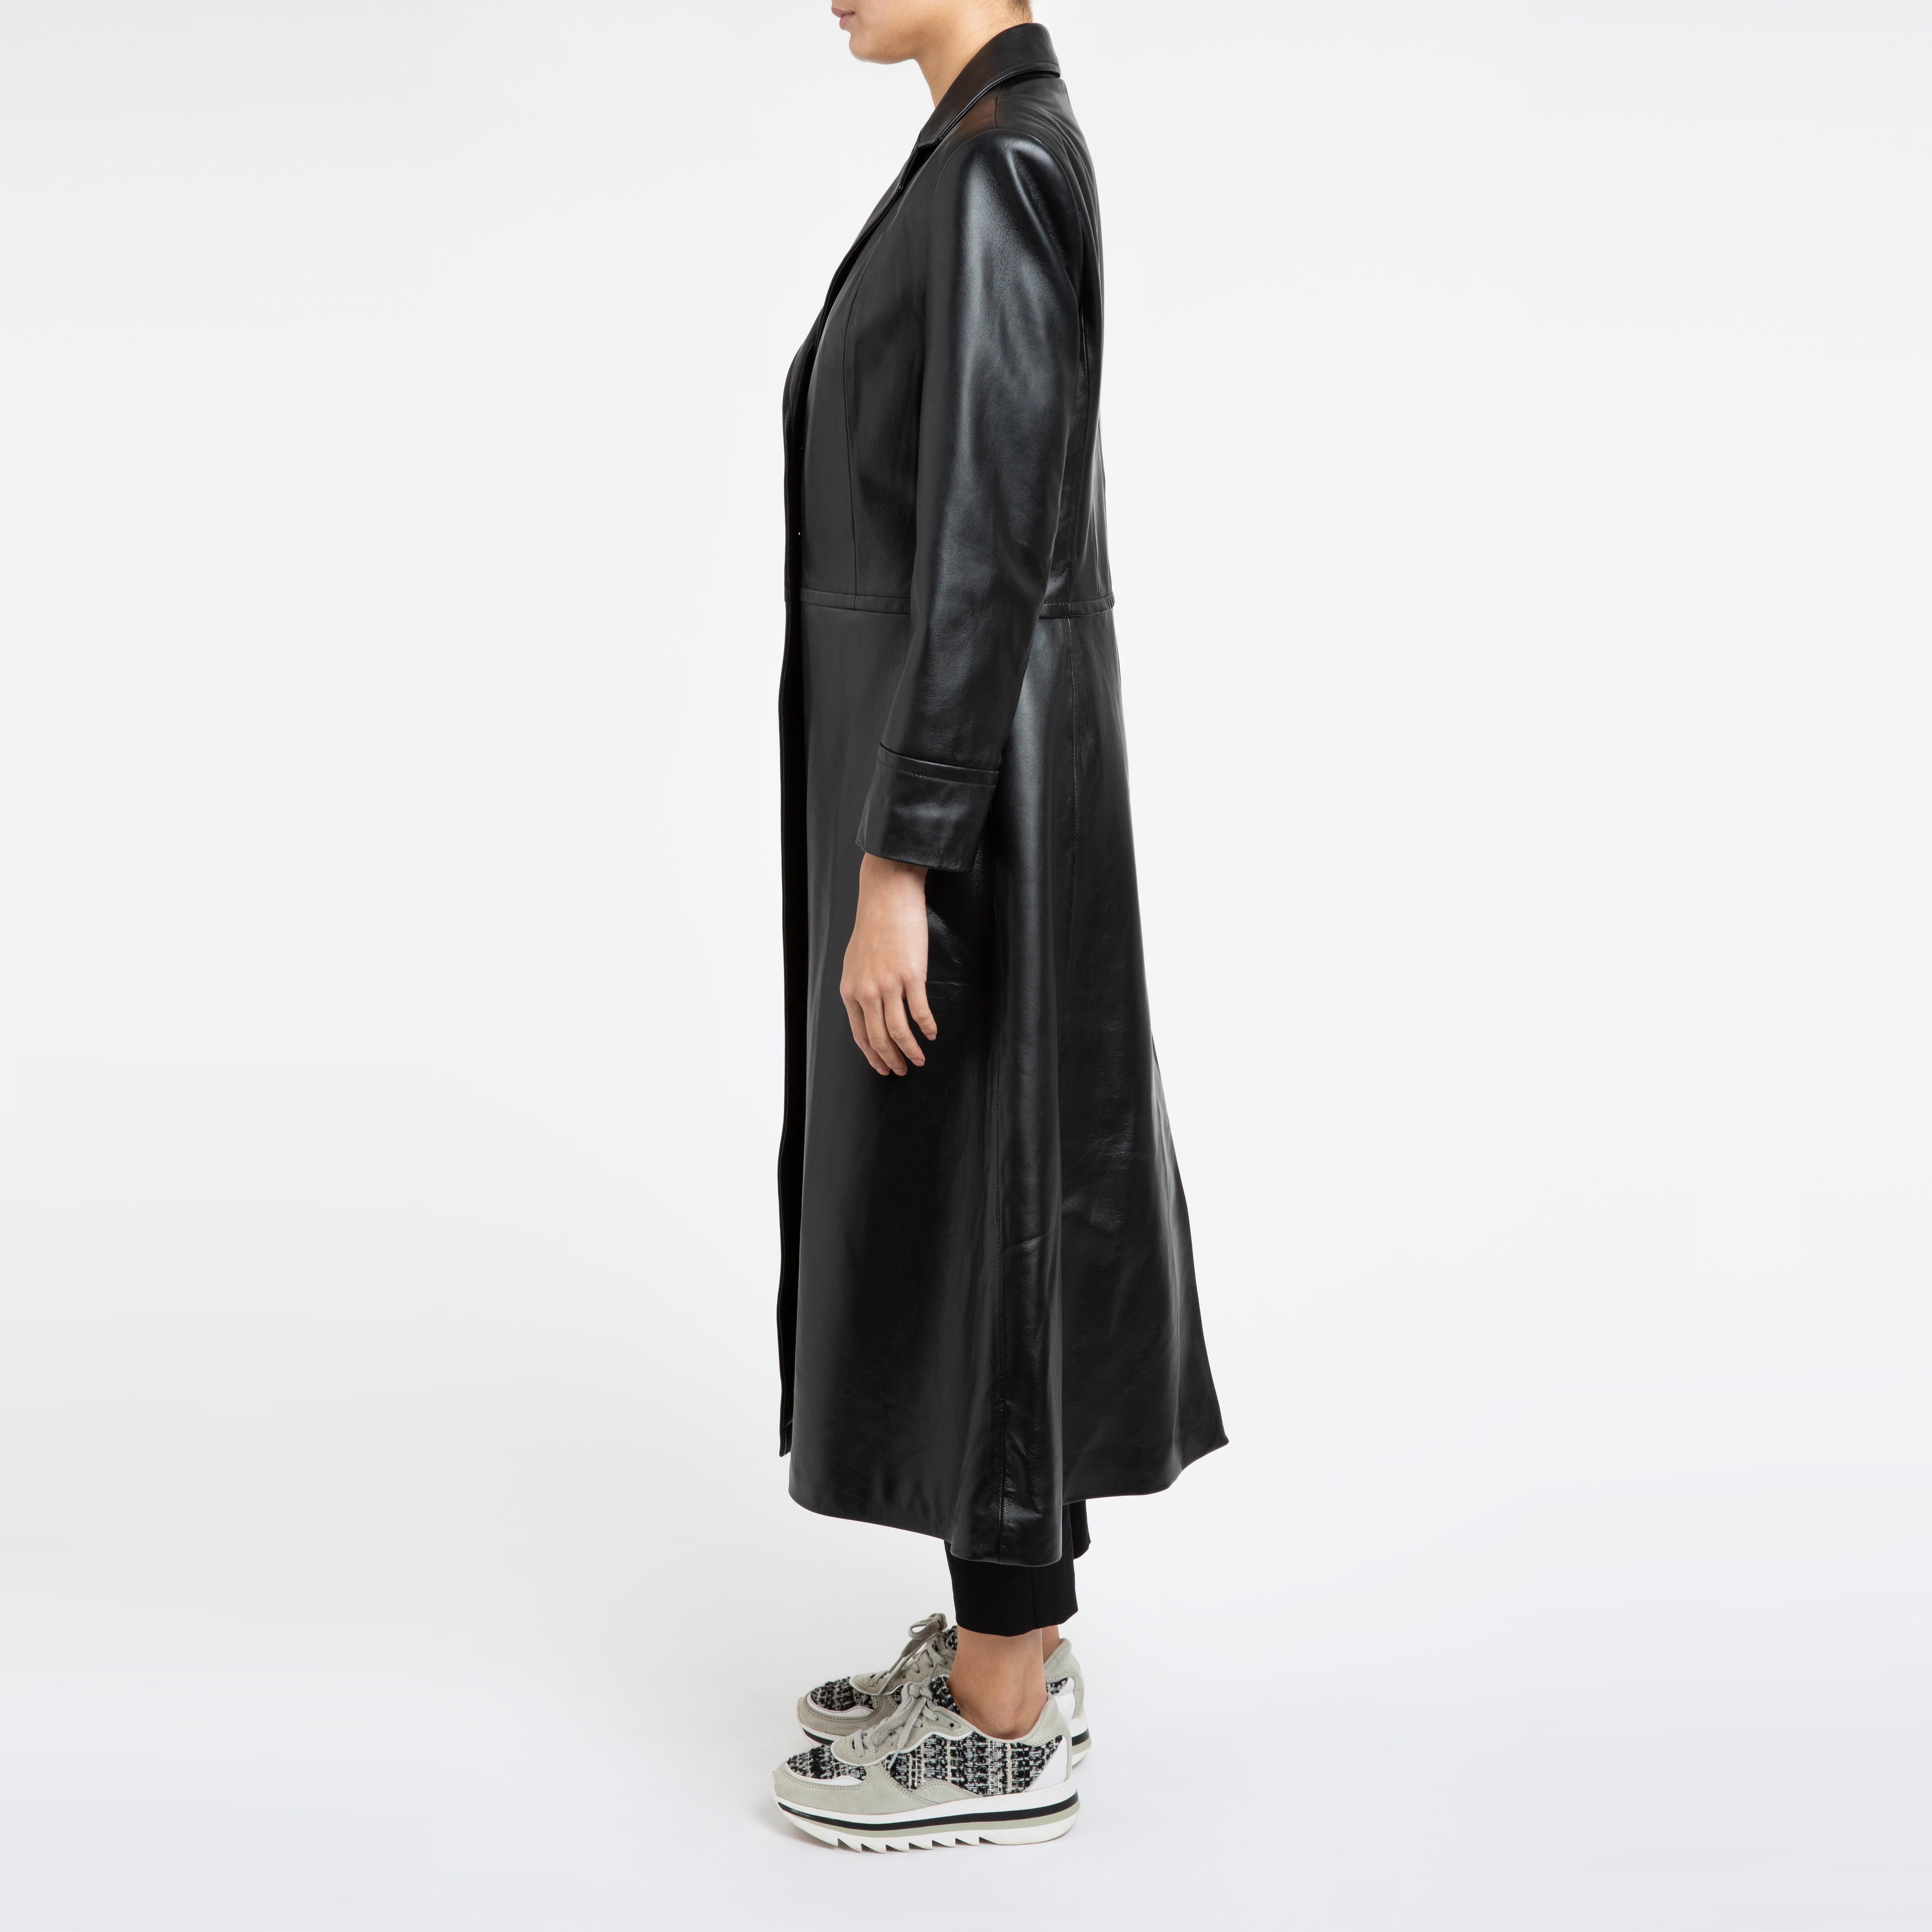 Verheyen London Oversize 70's Leather Trench Coat in Black - Size uk 8 4